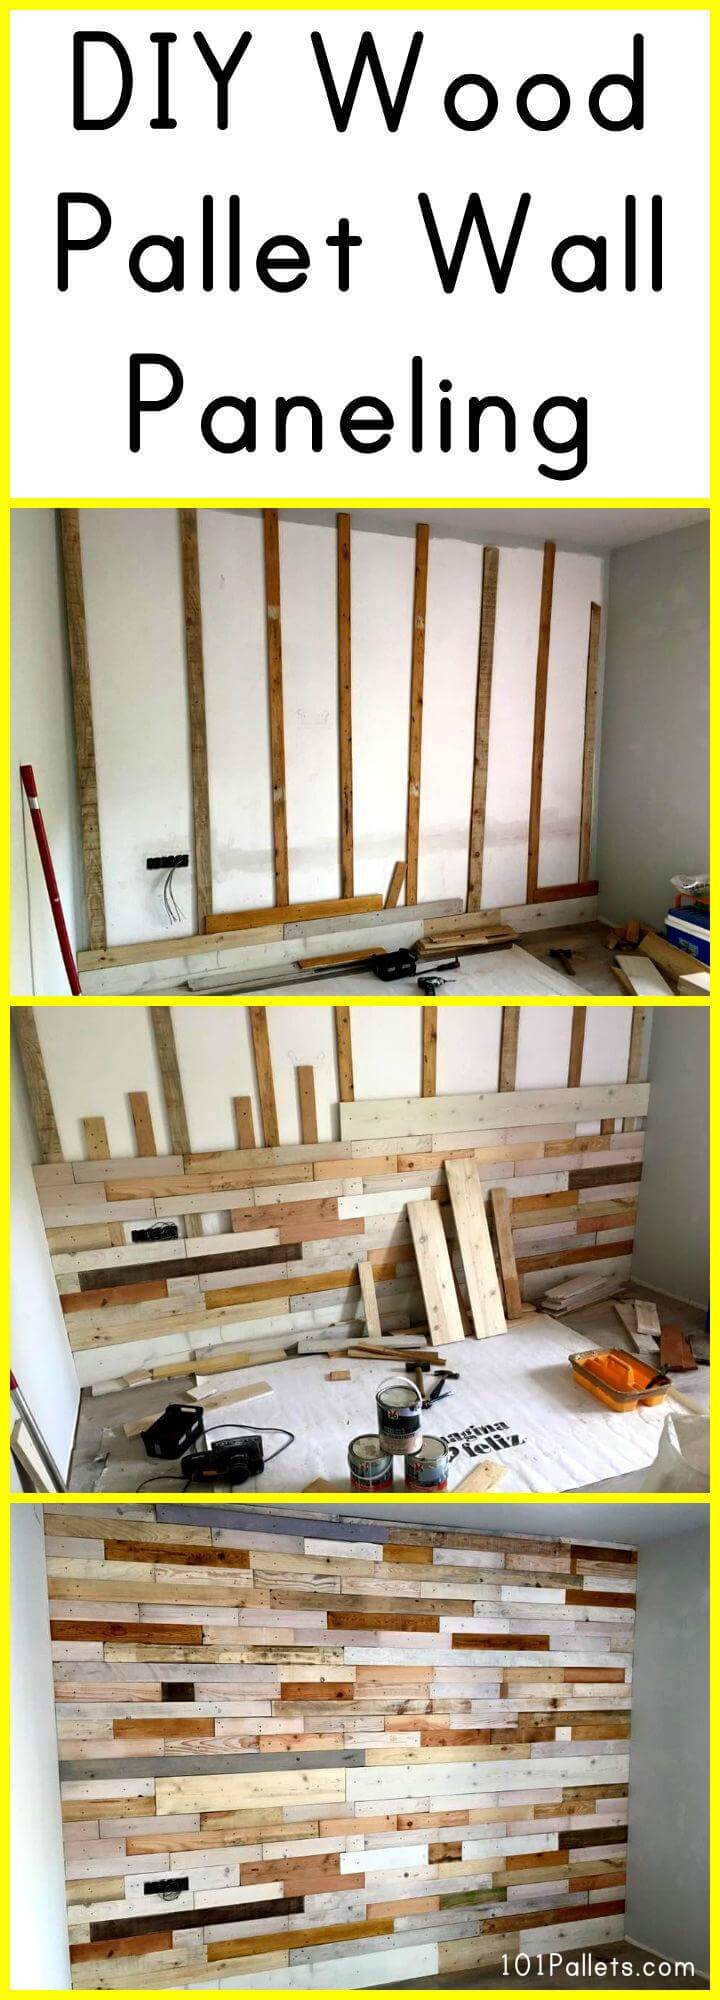 DIY Wood Pallet Wall Paneling - 101 Pallets